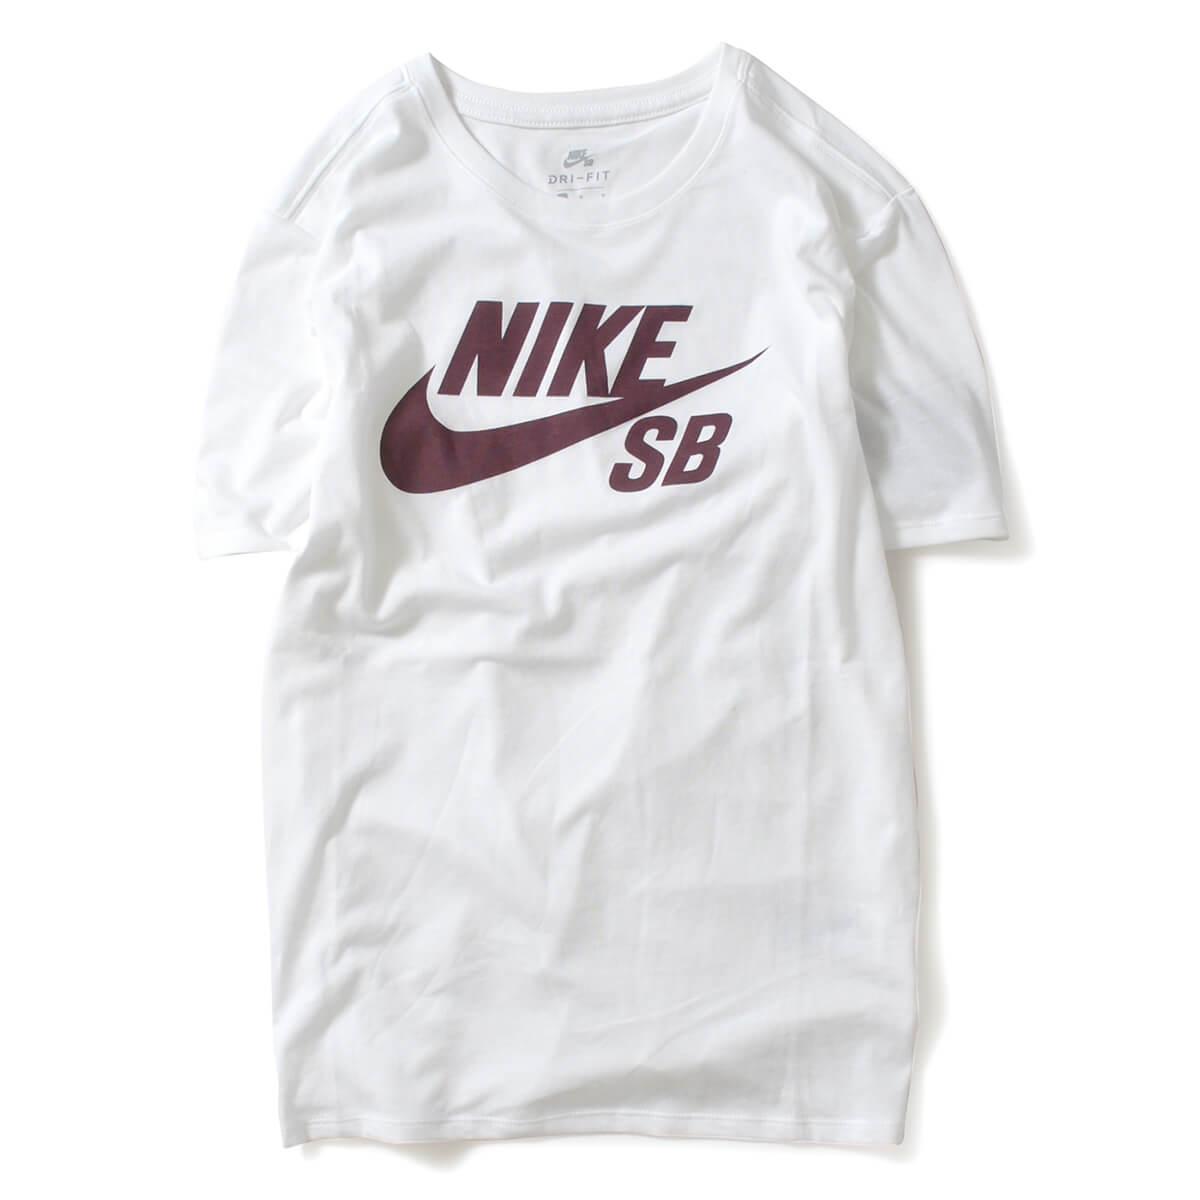 Nike SB Clothing Logo - Lafayette: Kie Ney's B Nike SB Dry Fitting Logo T Shirt DRI FIT LOGO